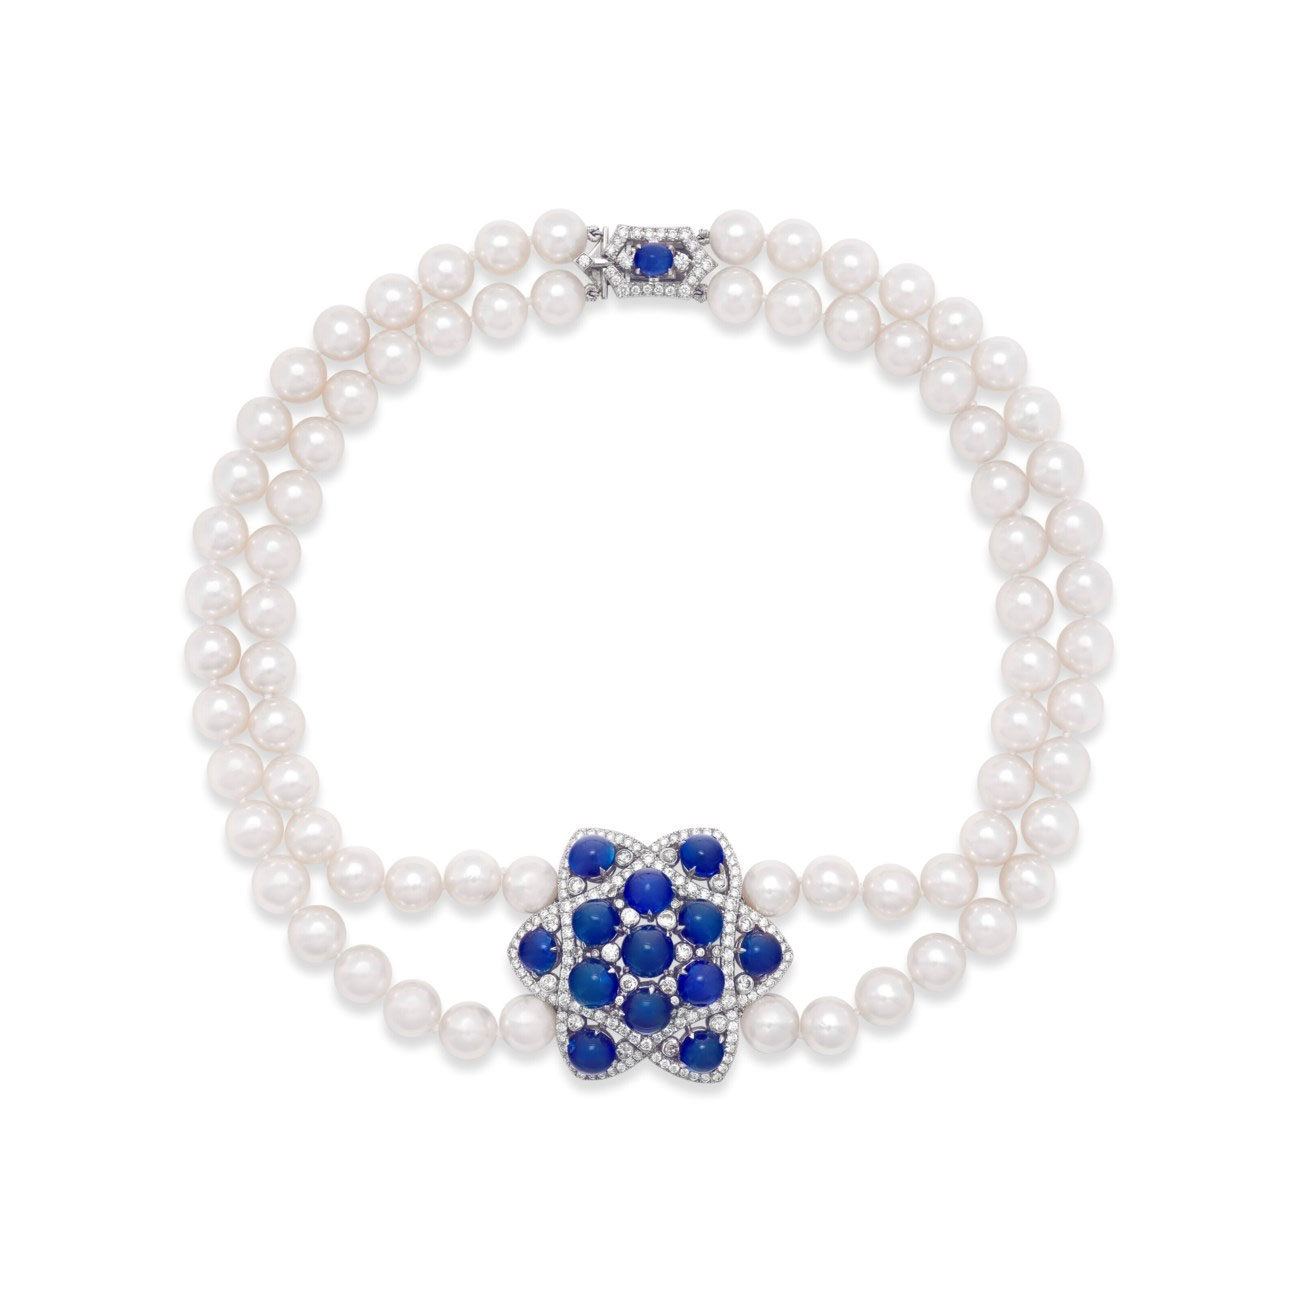 La collana di perle e zaffiri indossata da Audrey Hepburn